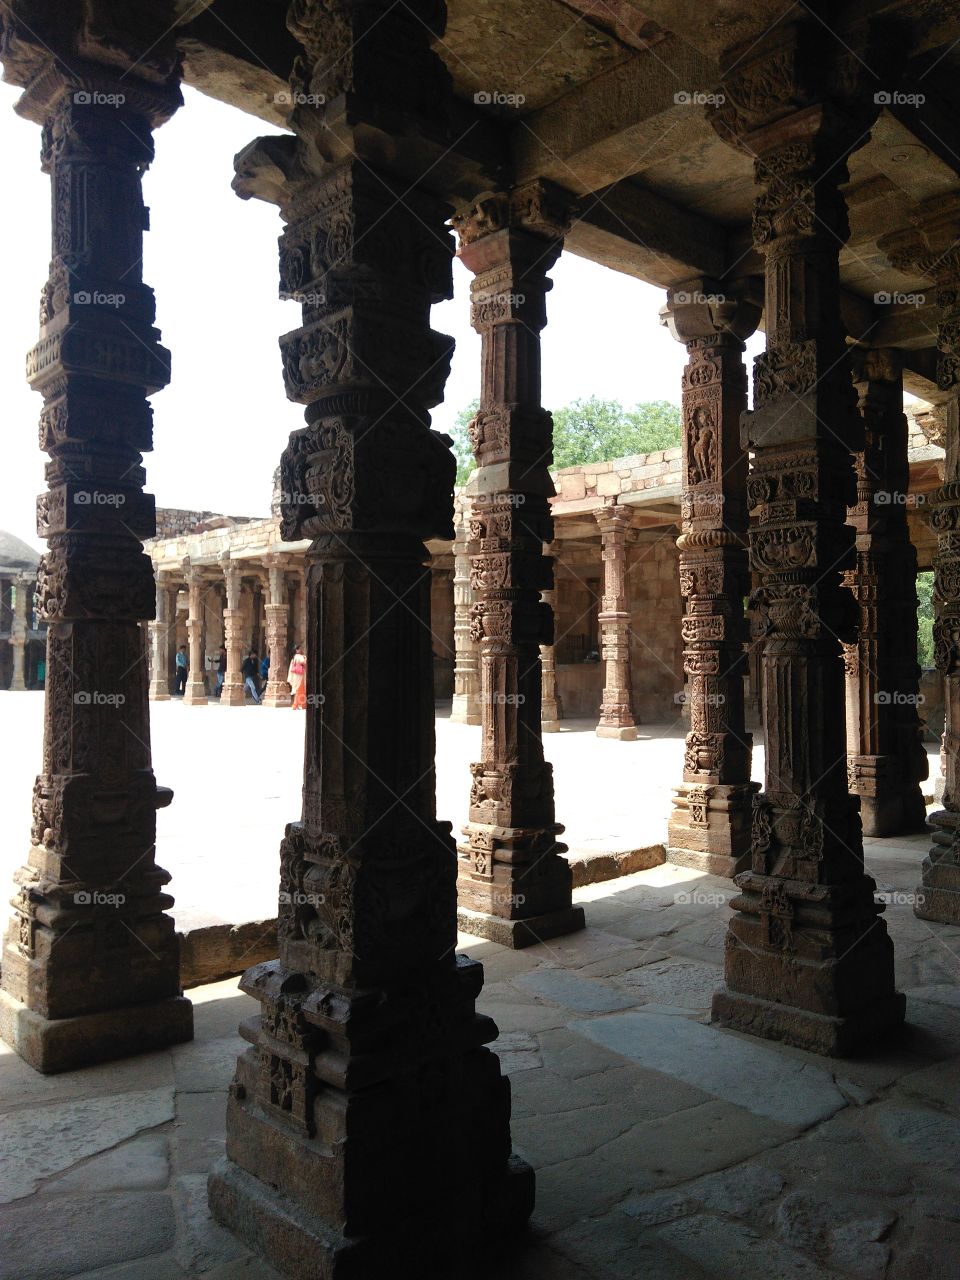 architecture 
pillars
ancient
historical
monument